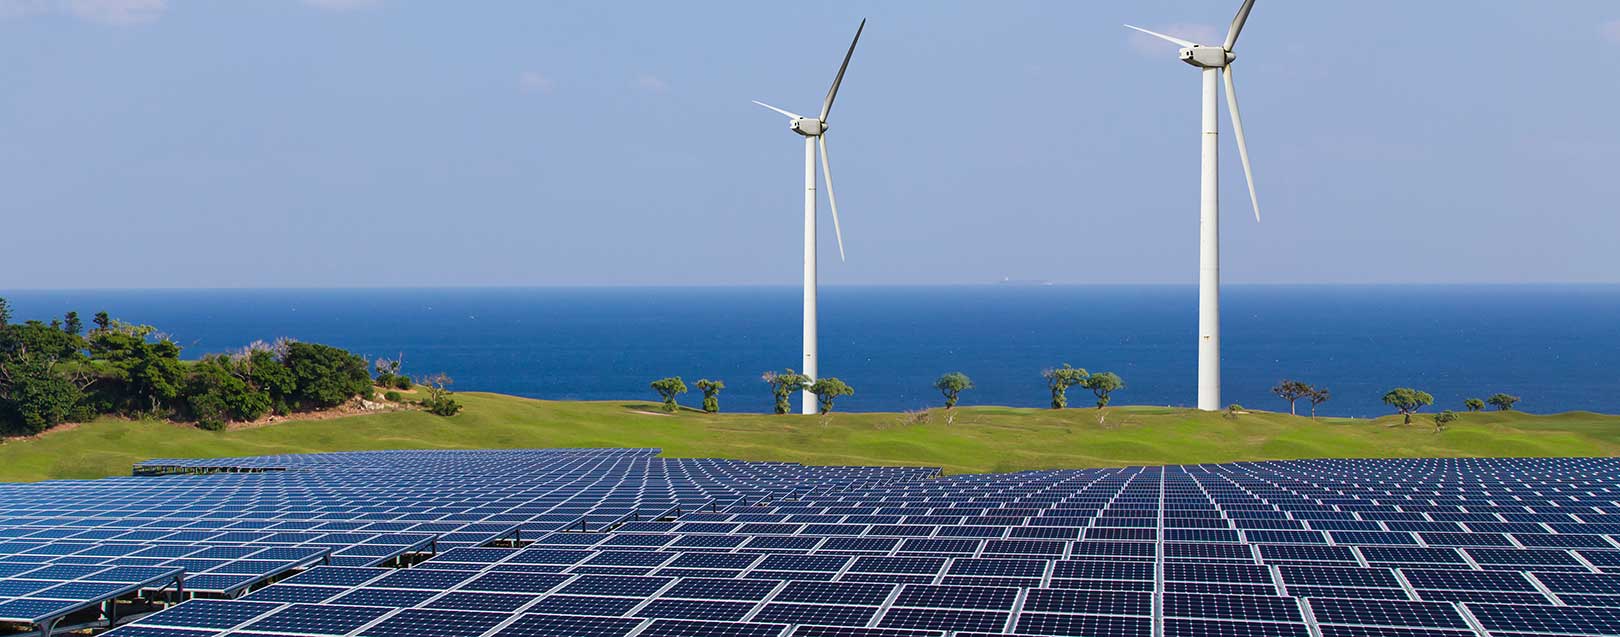 Installed capacity of renewable energy crosses 44 GW